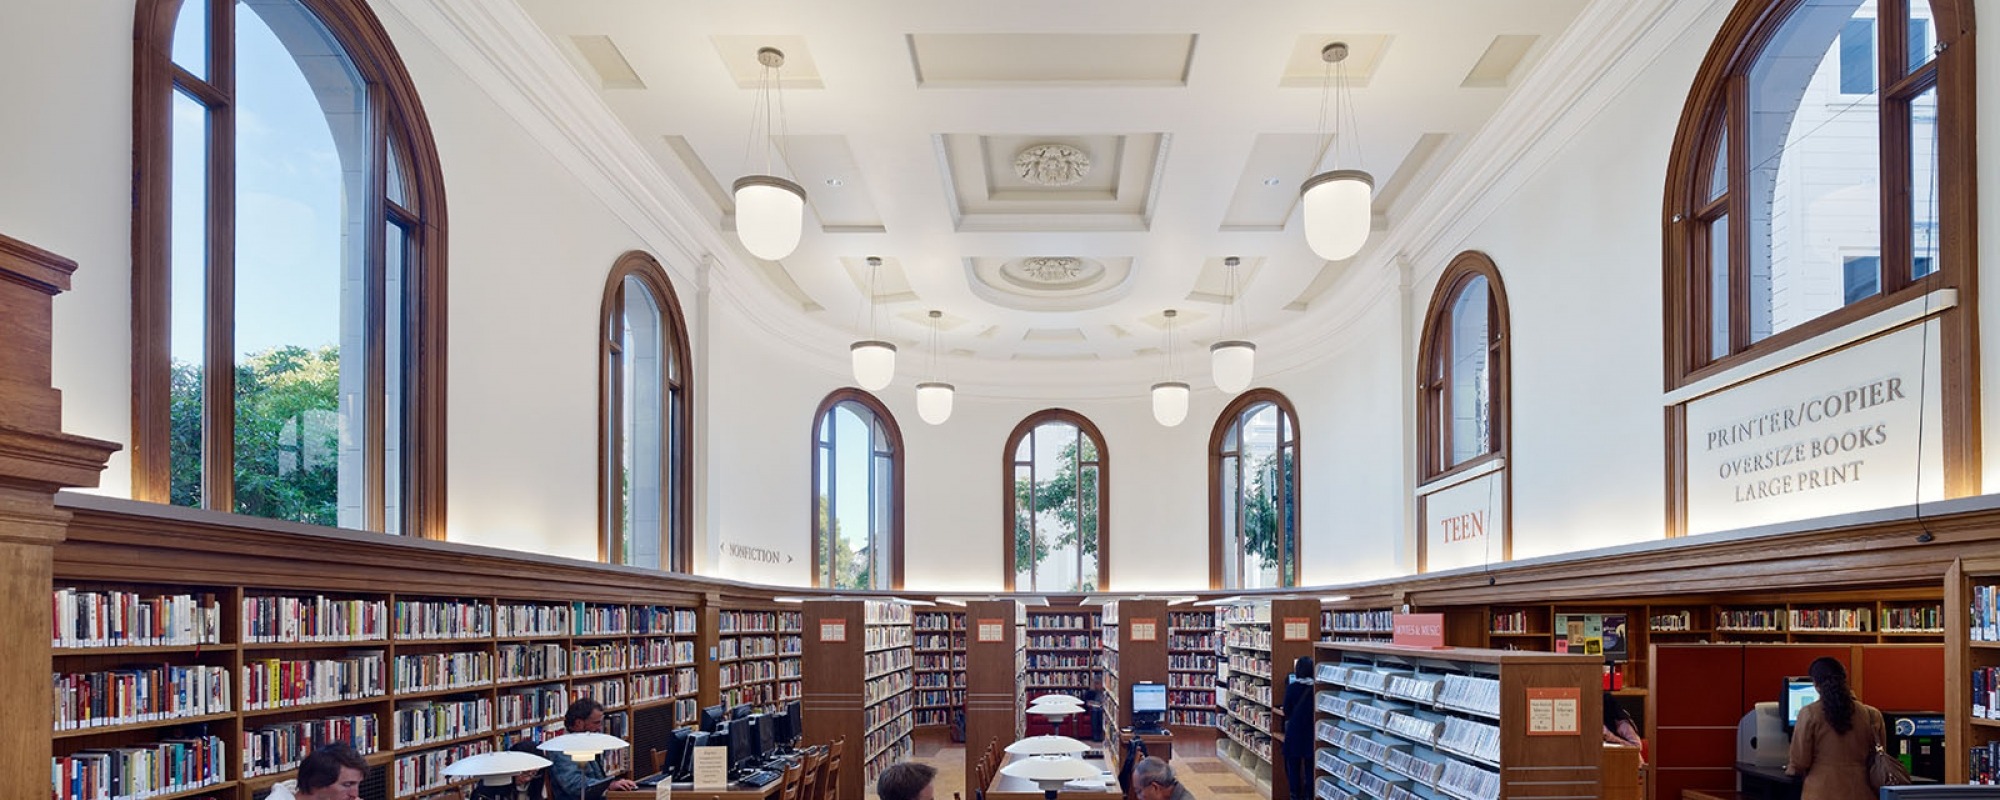 Golden Gate Valley Branch Library